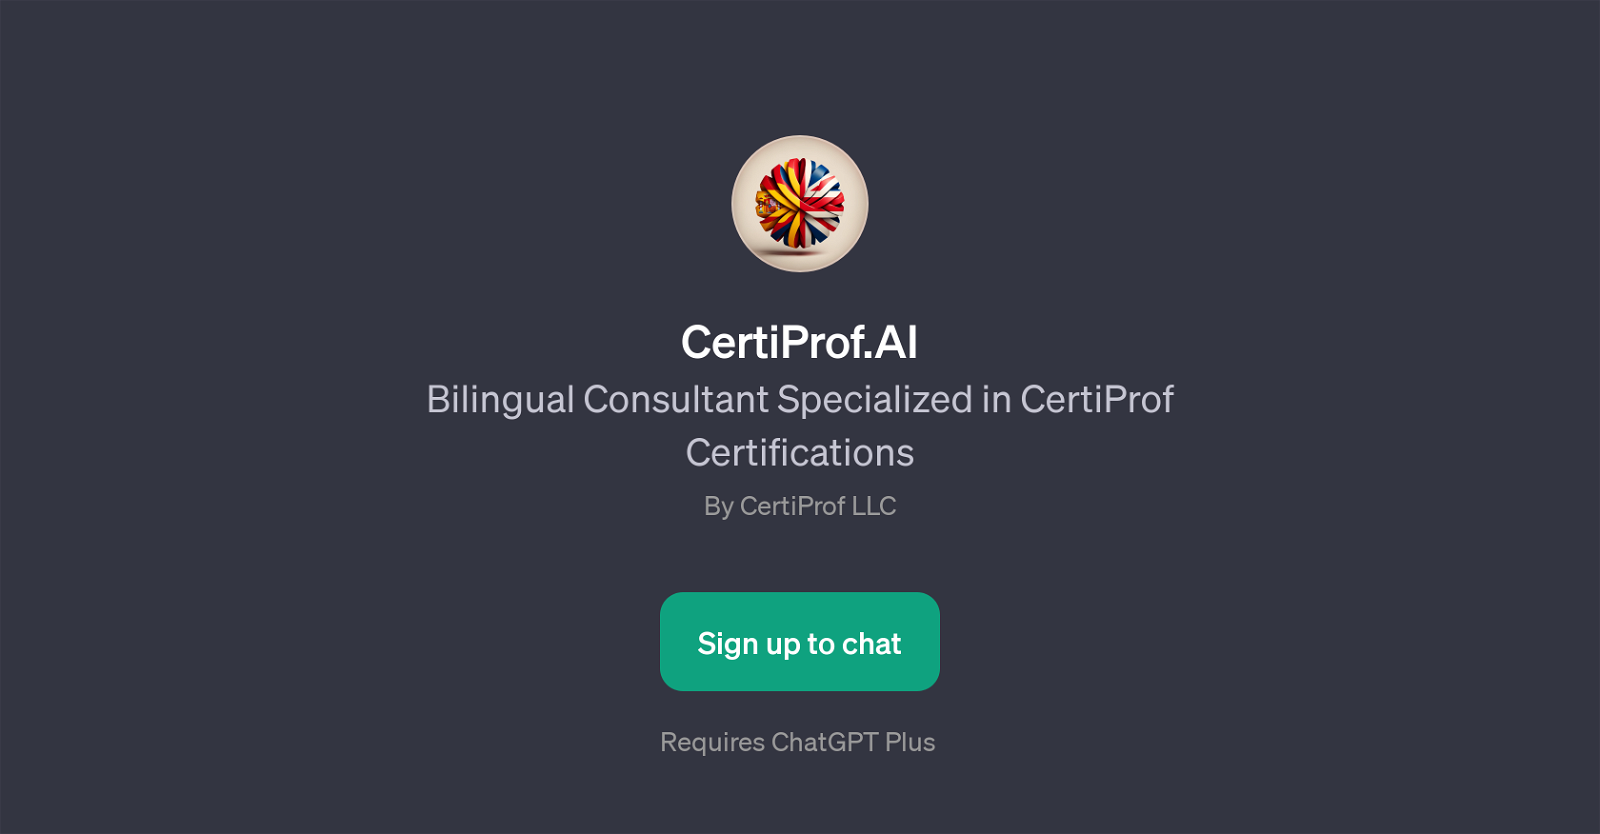 CertiProf.AI website